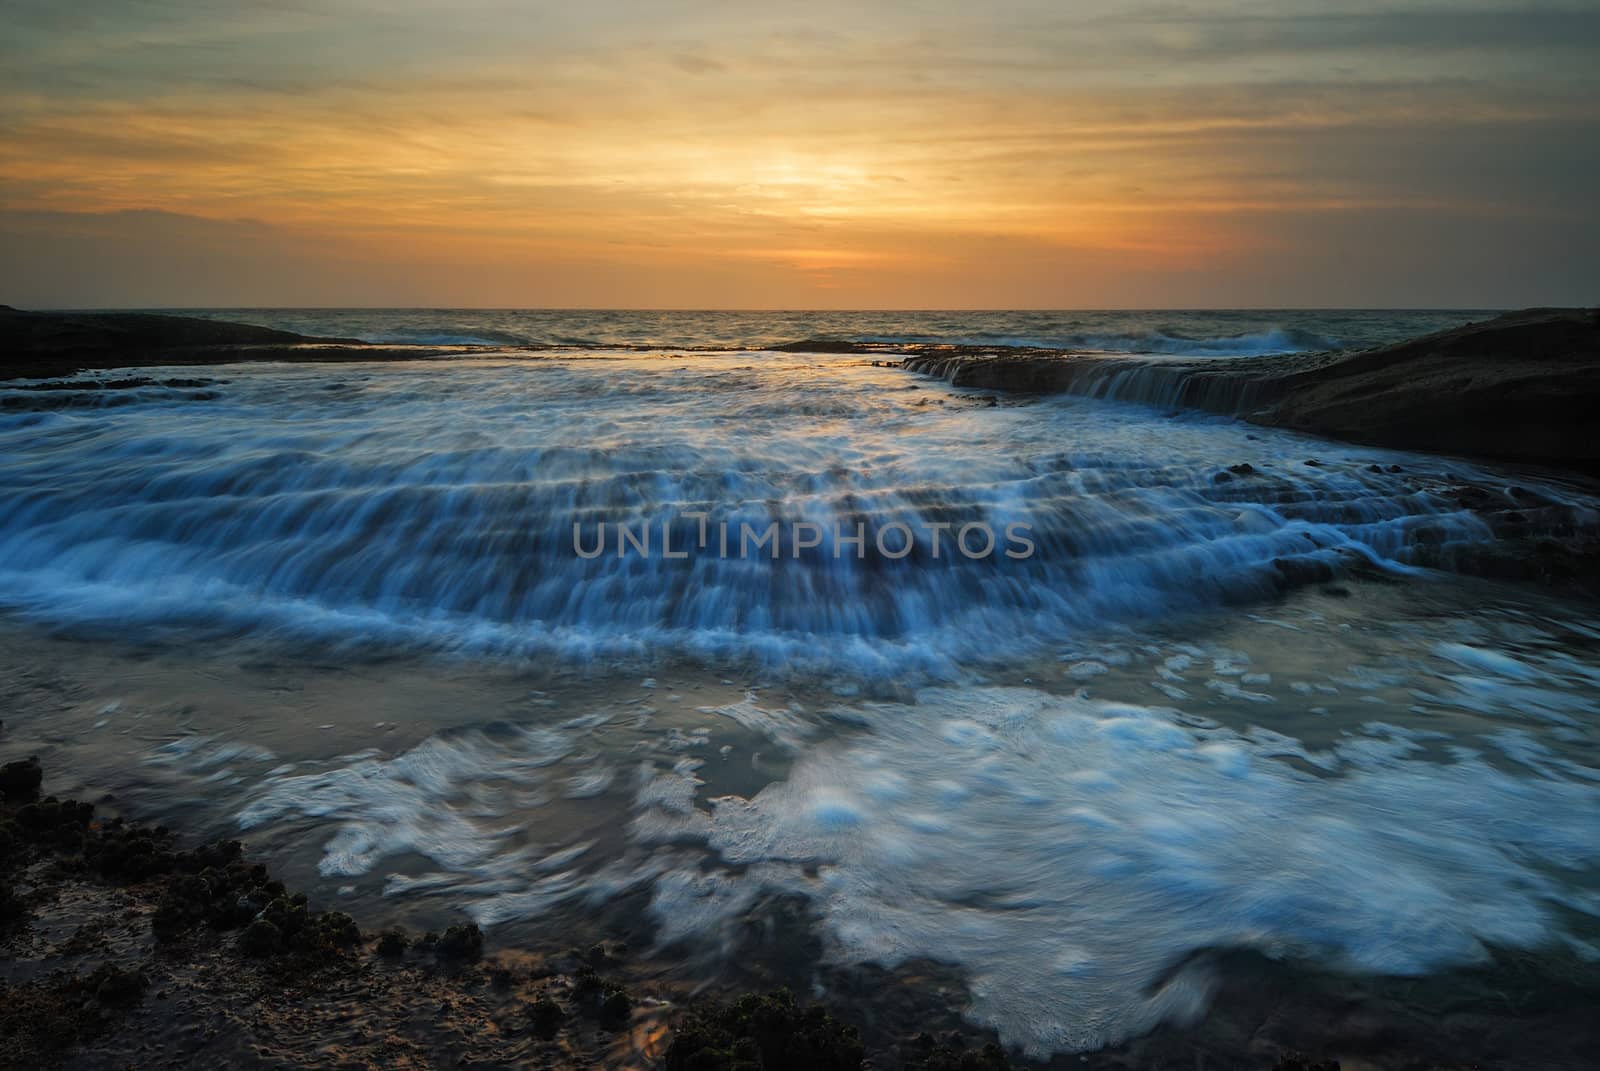 Sunrise seascape with rushing waves